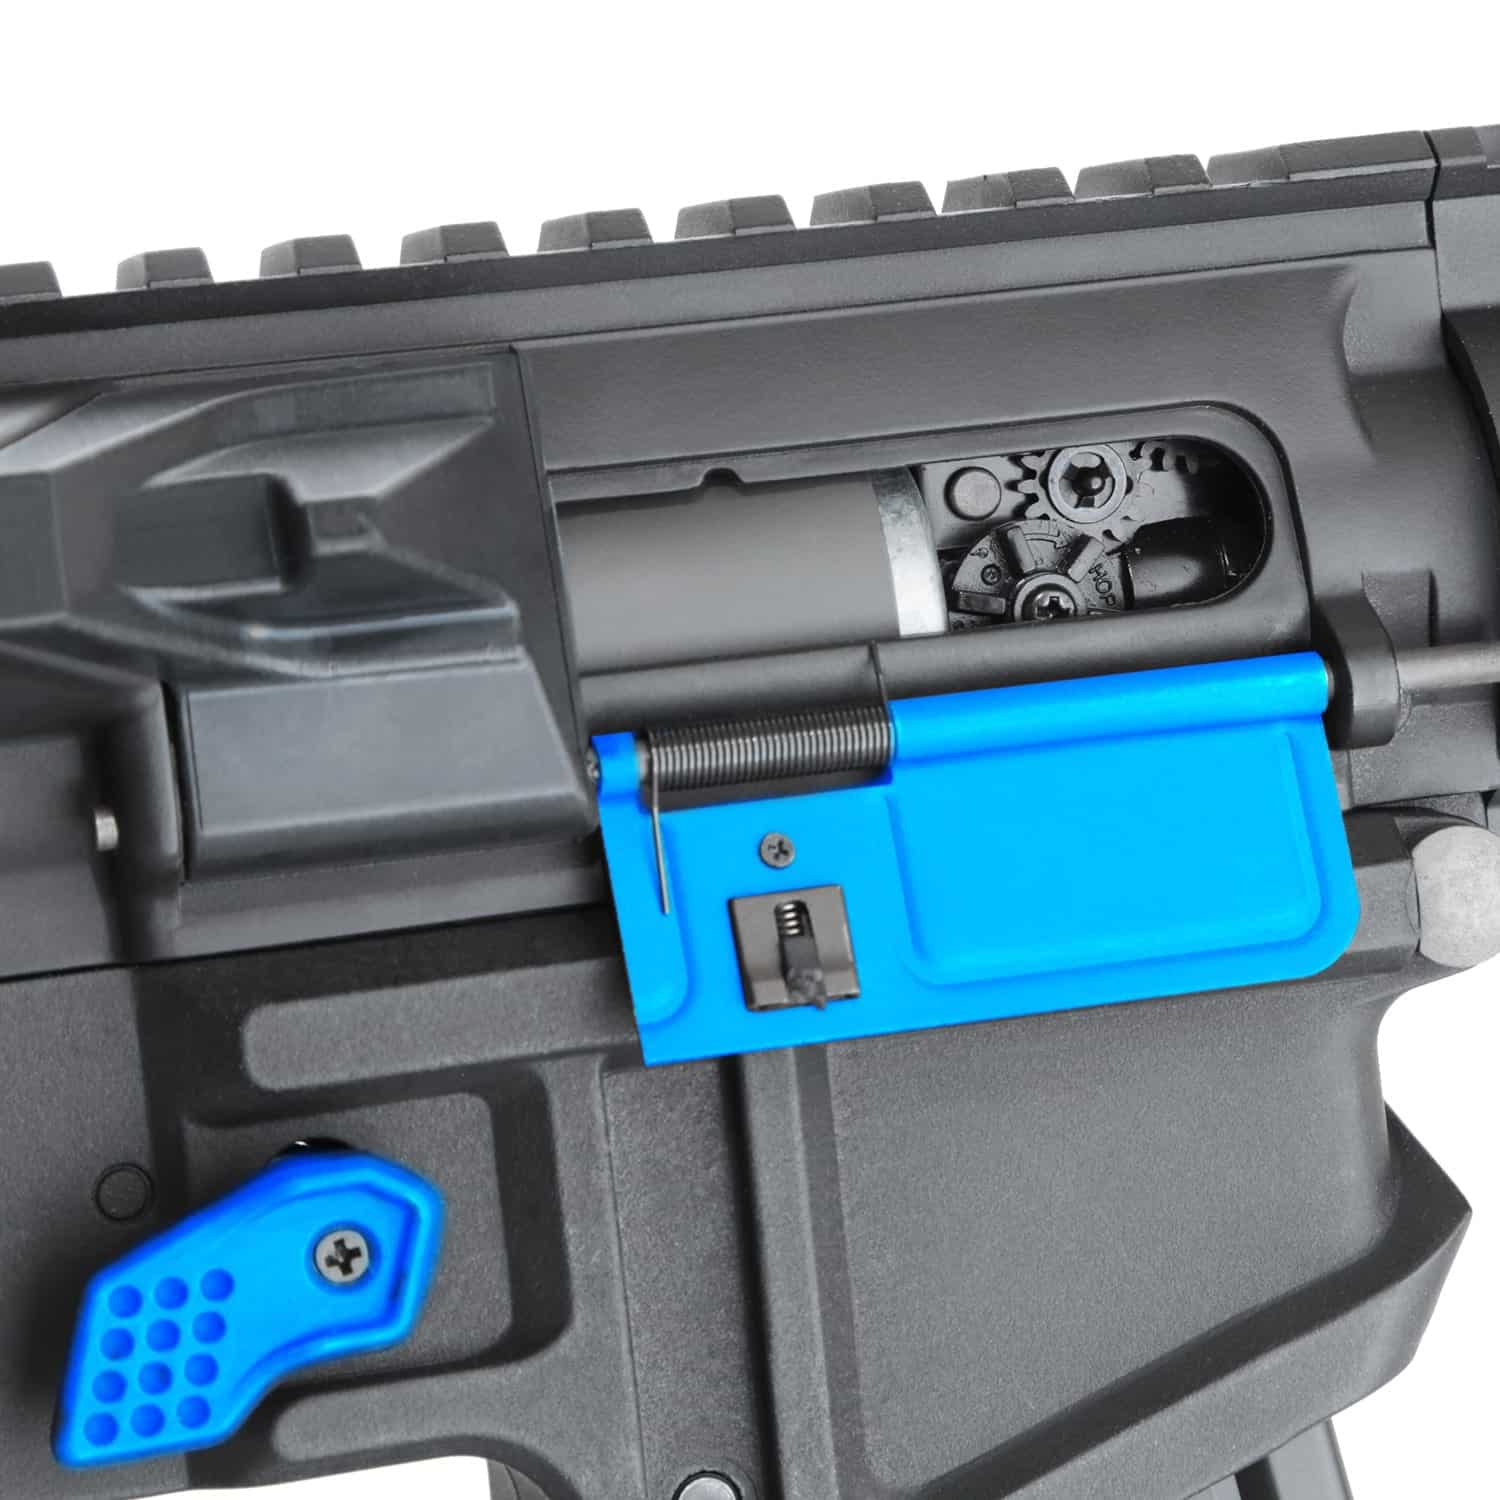 King Arms PDW 9mm SBR M-LOK - Black & Blue